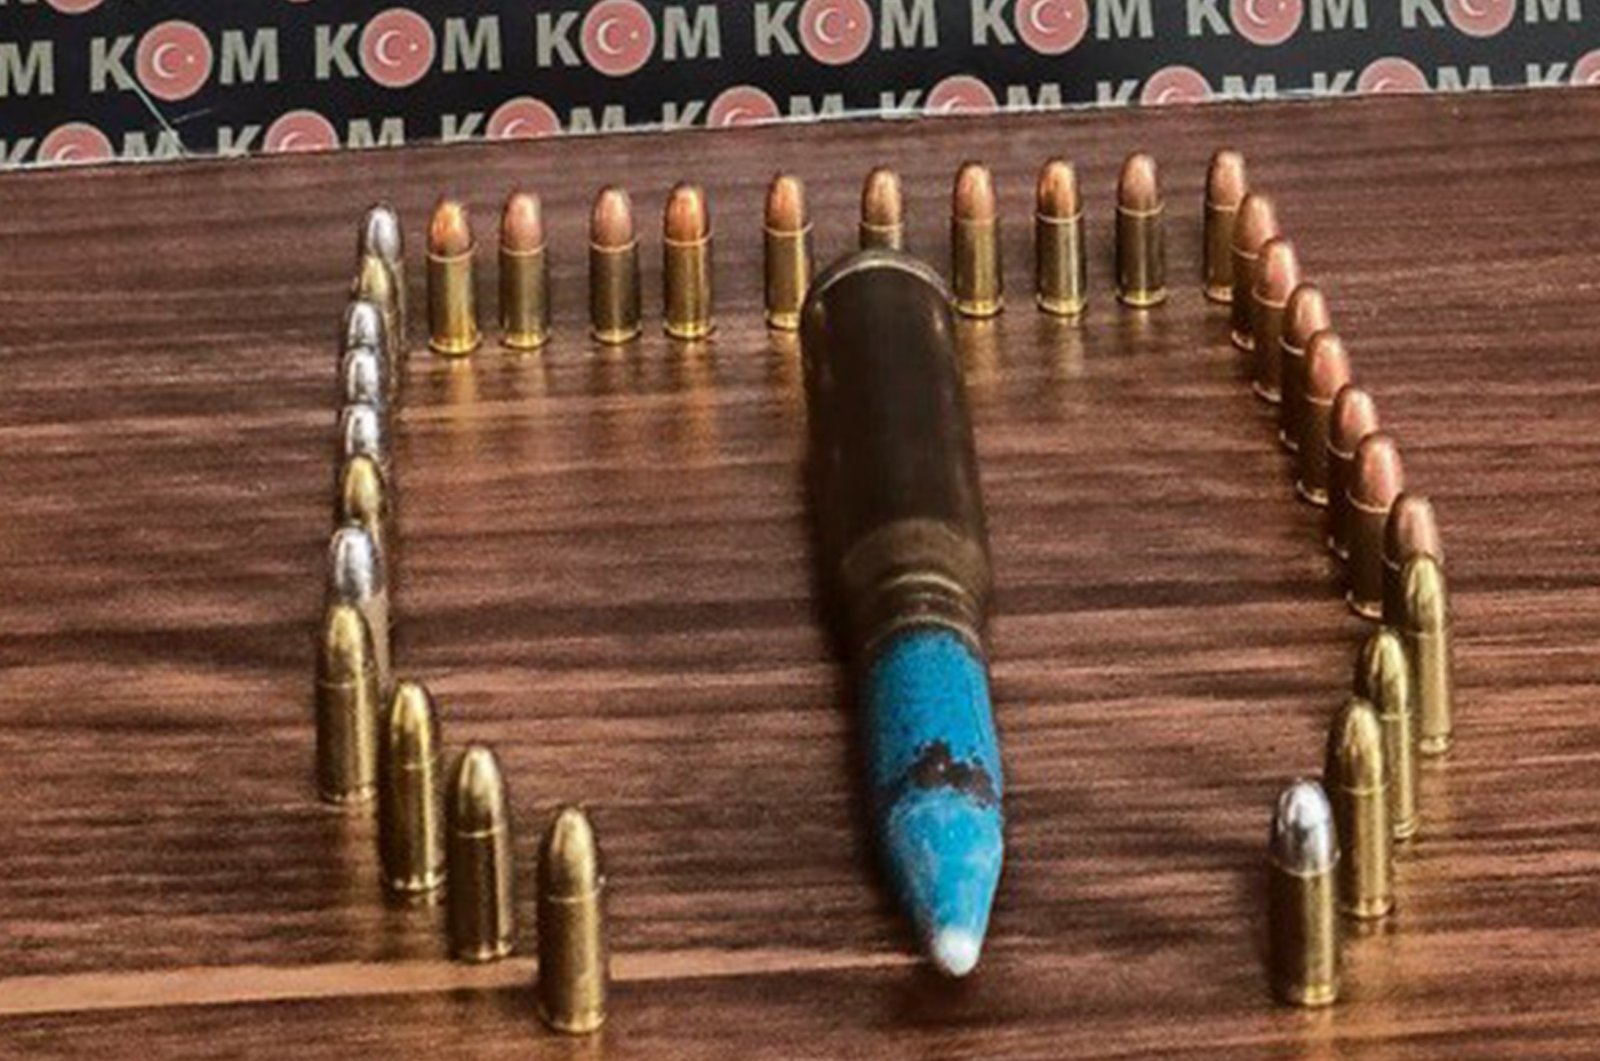 An anti-aircraft bullet and pistol bullets are seen on the table, Muğla, Turkey, Feb. 23, 2022. (IHA Photo)